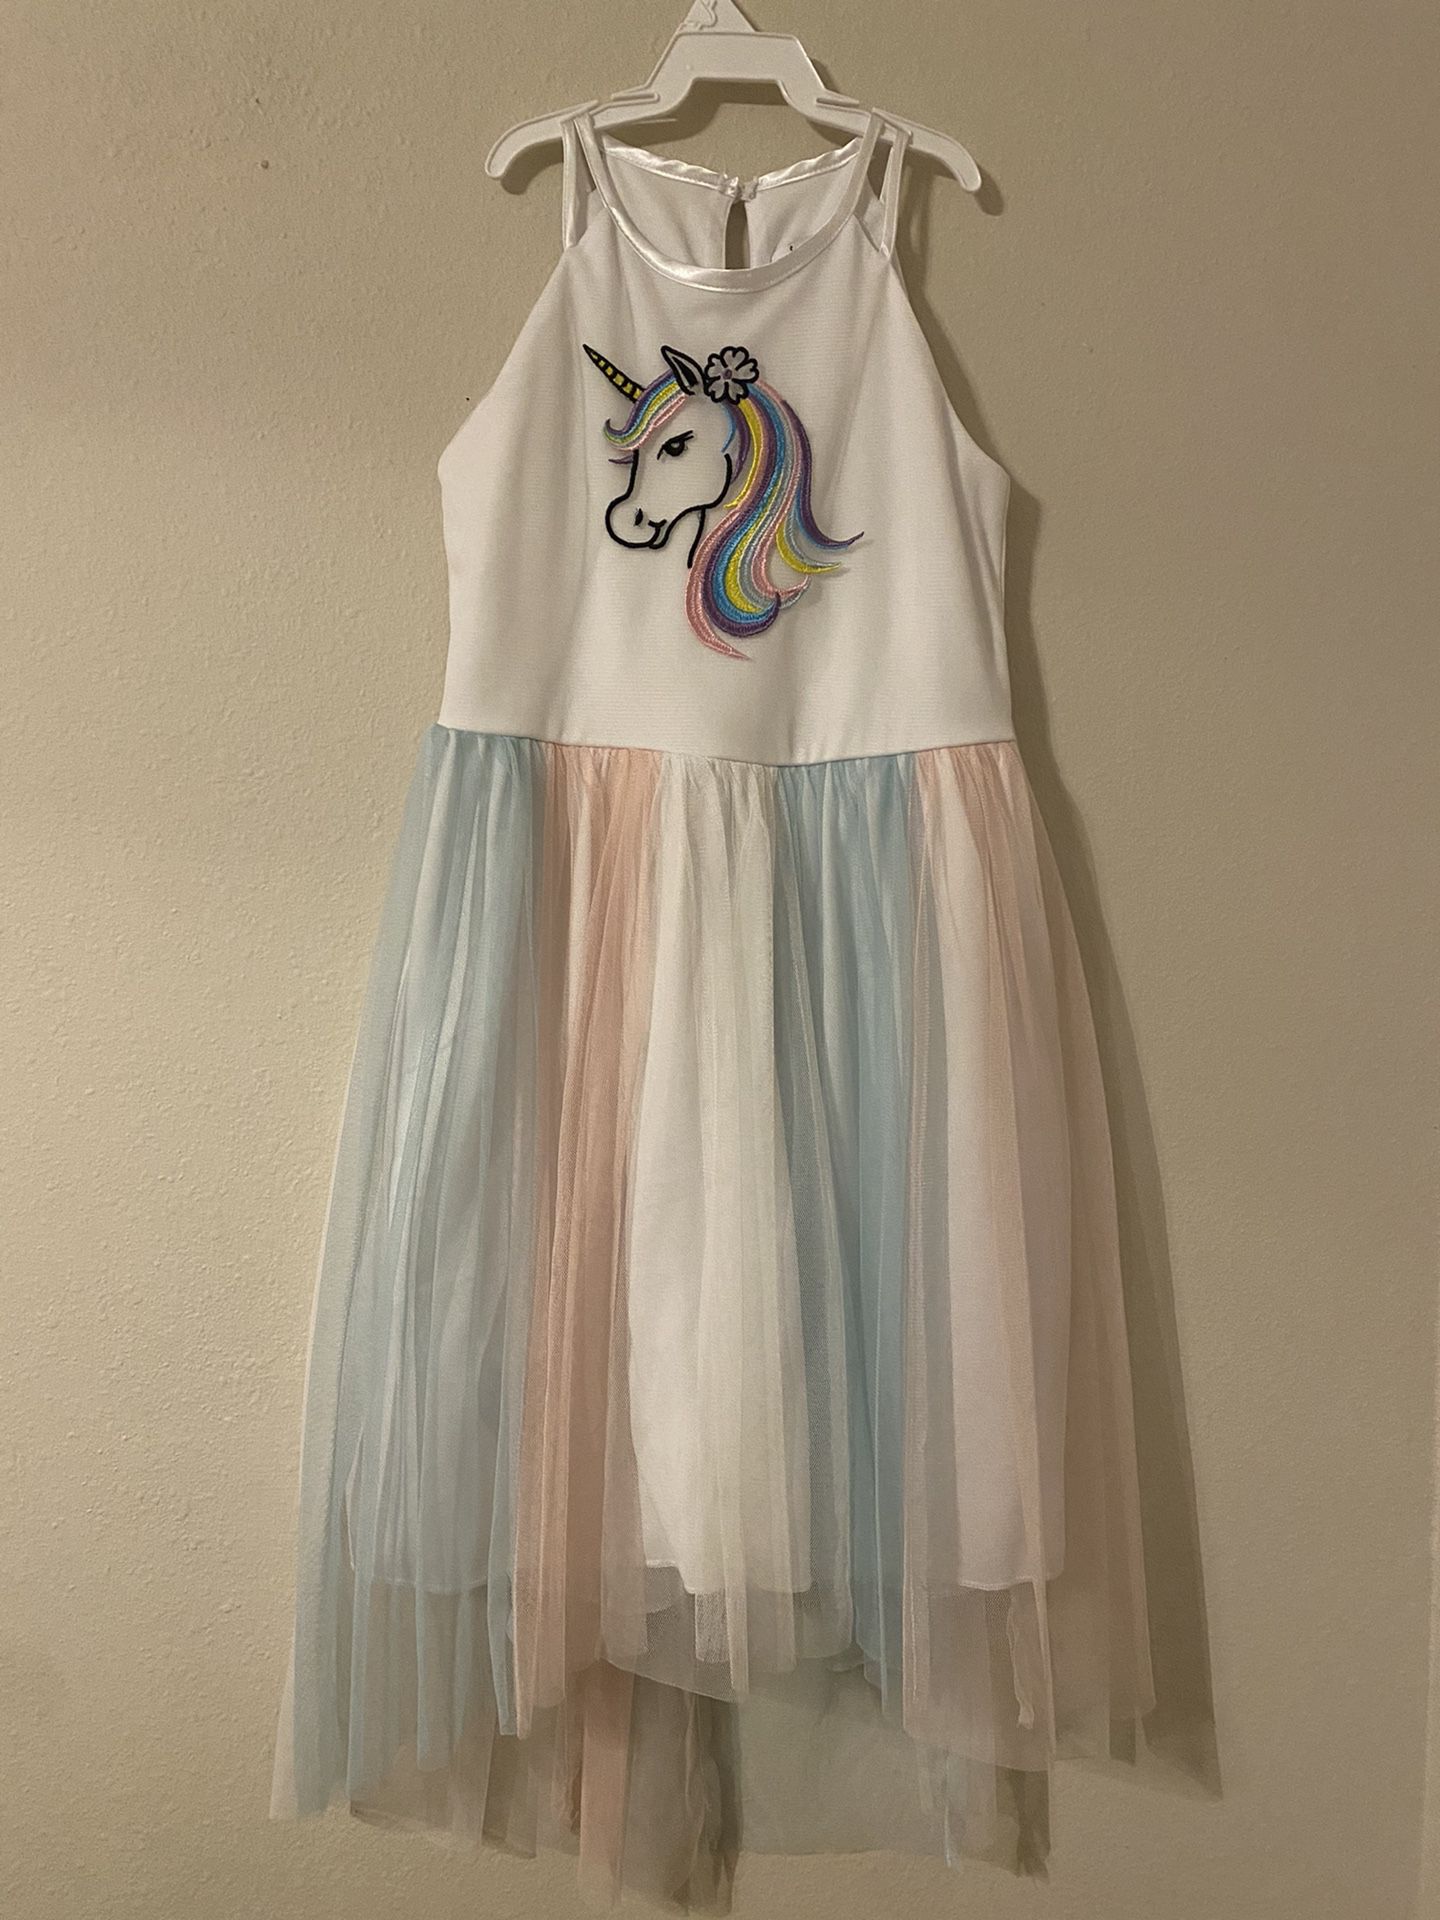 Unicorn Dress Size 6x